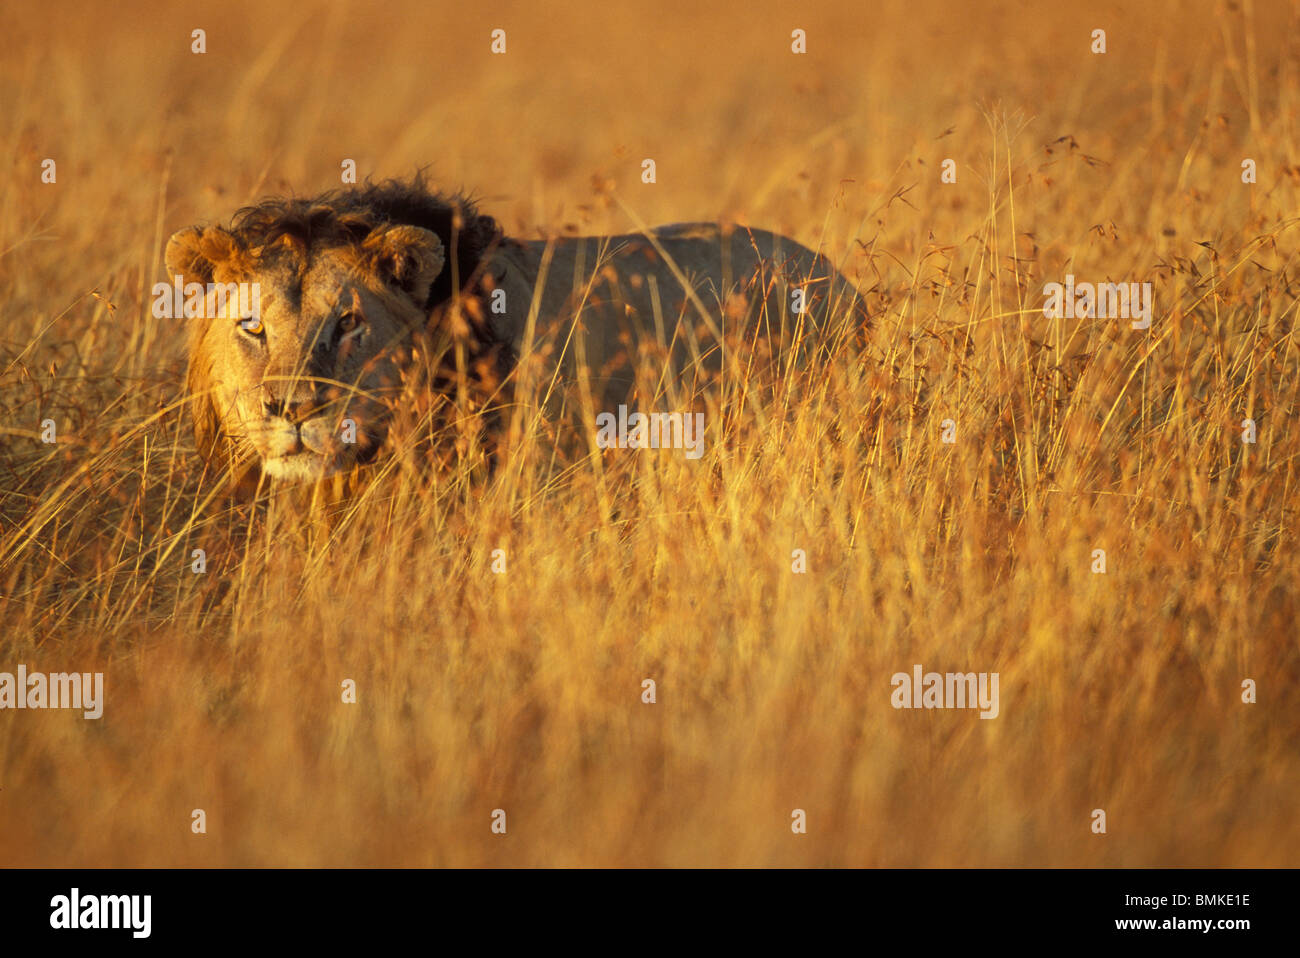 Africa, Kenya, Masai Mara Game Reserve, Adult Male Lion (Panthera leo) in tall grass on savanna Stock Photo